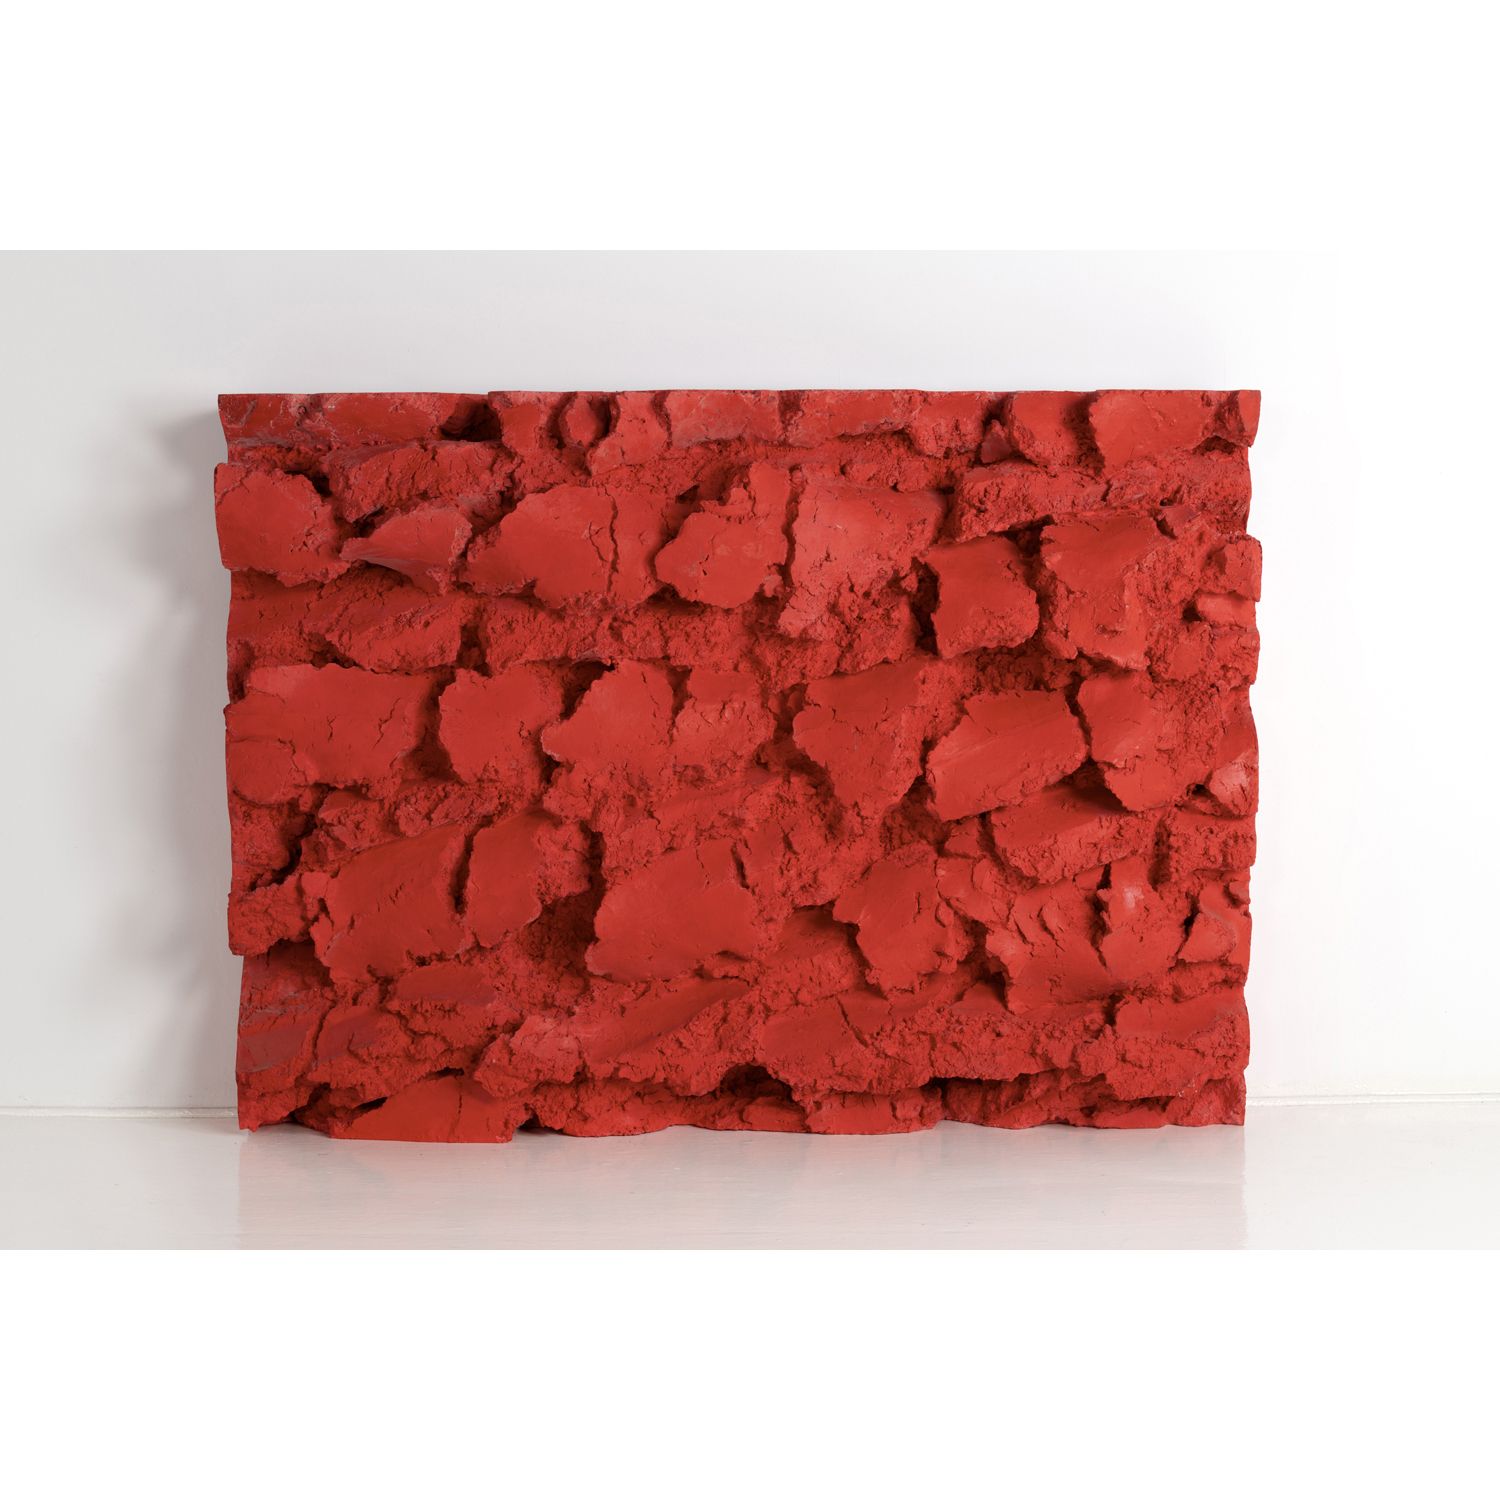 Null 迪迪埃-马塞尔（生于1961年

珊瑚红劳动，2012

丙烯酸树脂和聚酯树脂染色的质量，玻璃纤维

134 x 187 x 22 cm

出处：--&hellip;